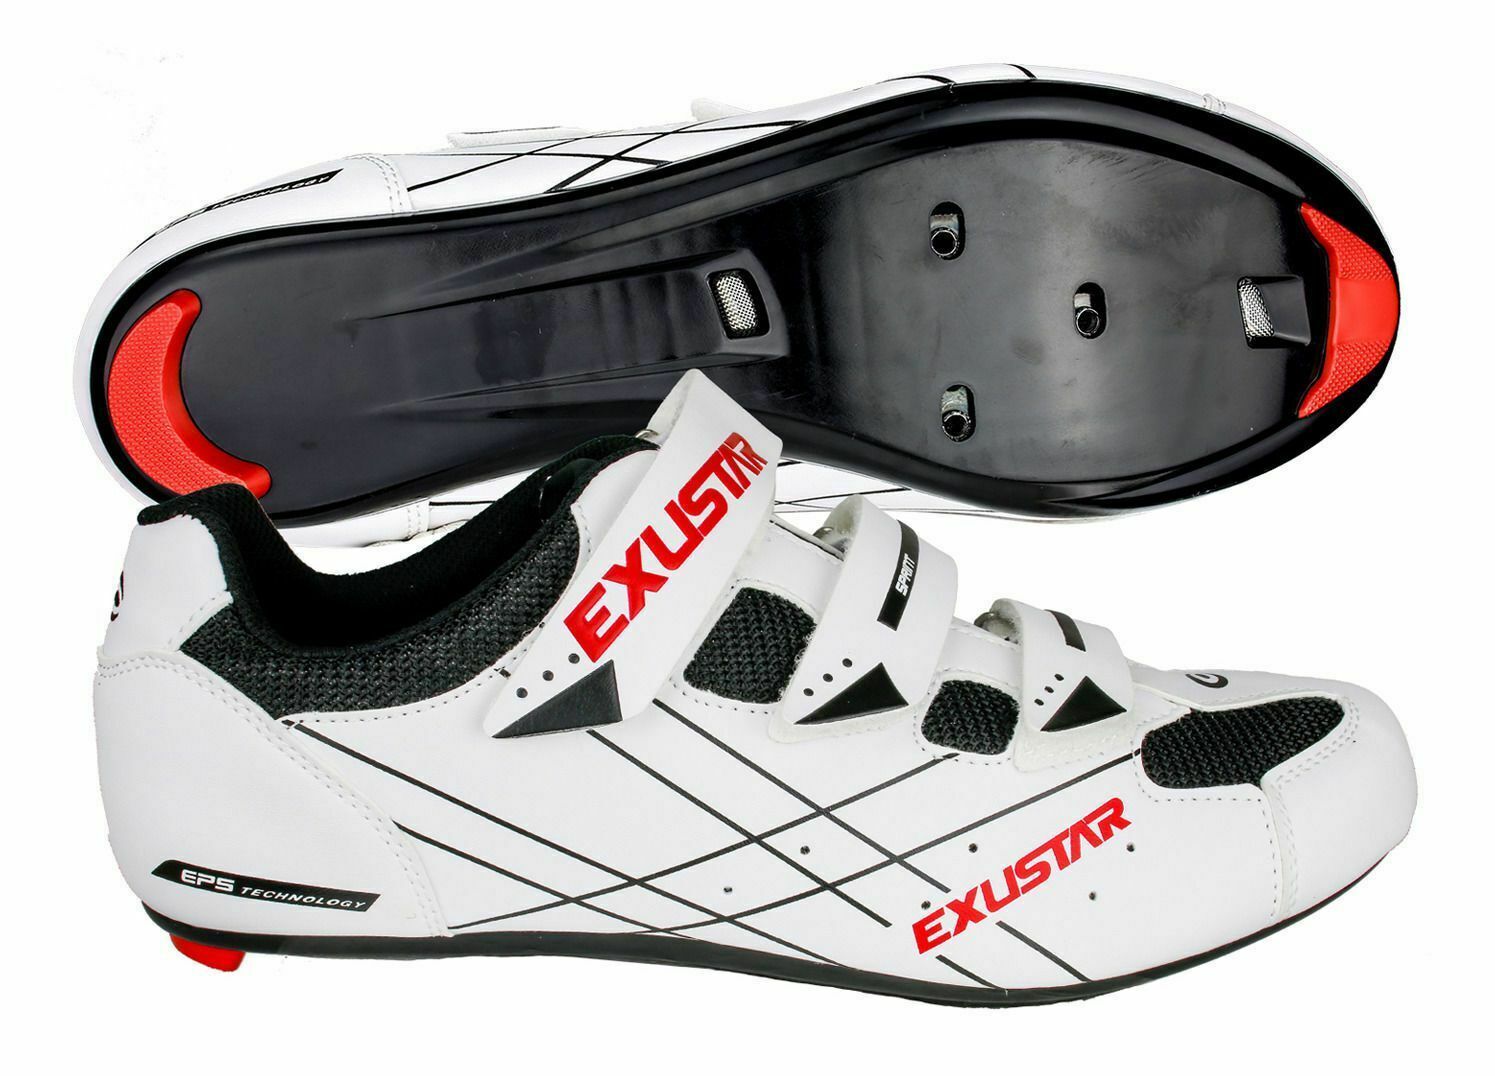 E-SR493 Road Bike Shoes Size 41